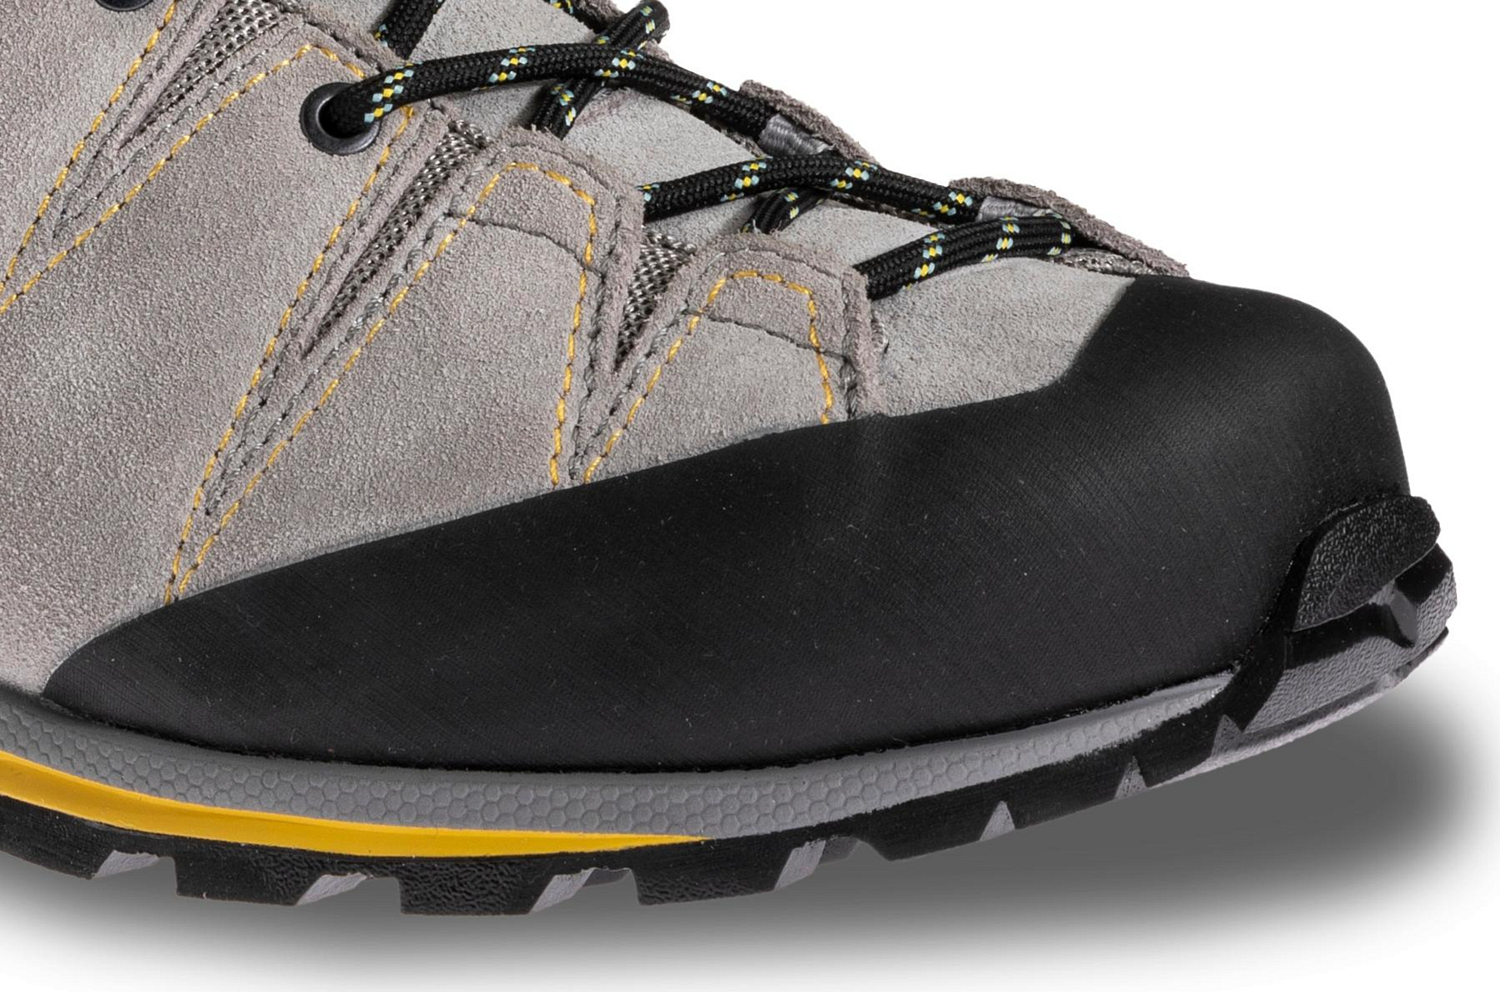 Ботинки Dolomite Diagonal Pro Mid GTX W's Flt G/Agt Gr / серый, бирюзовый